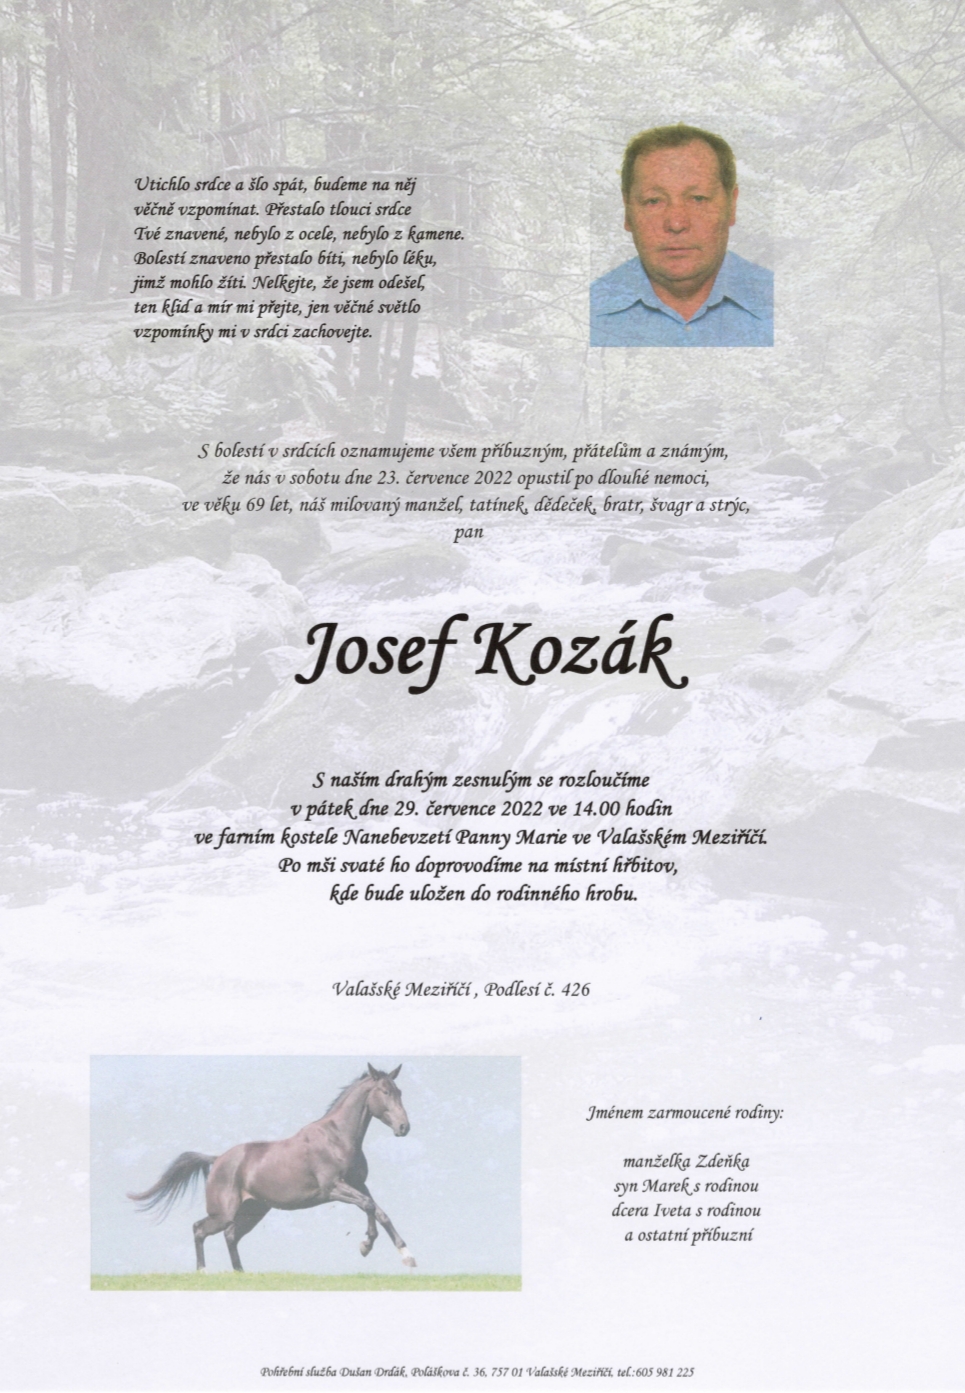 Josef Kozák